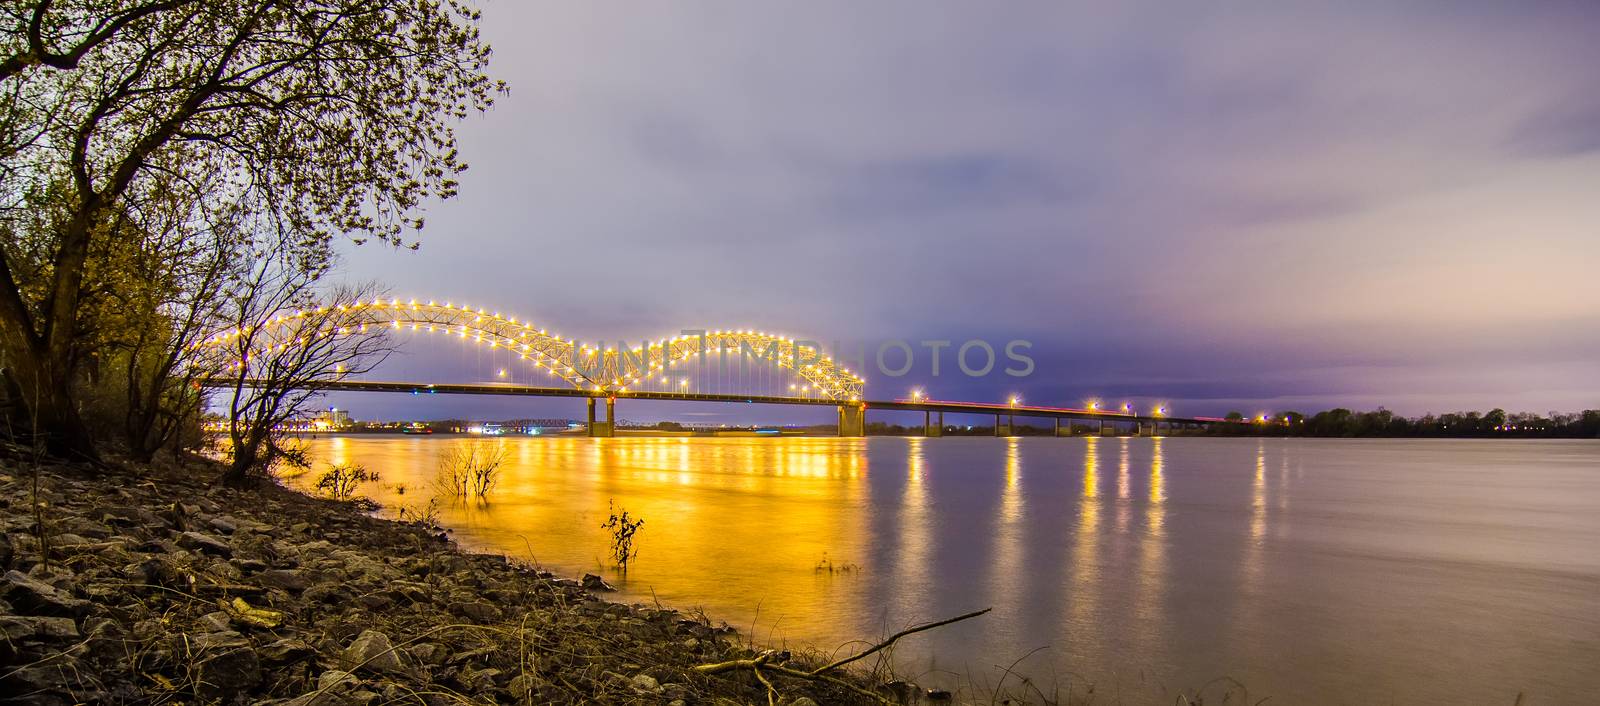  Hernando de Soto Bridge - Memphis Tennessee at night by digidreamgrafix